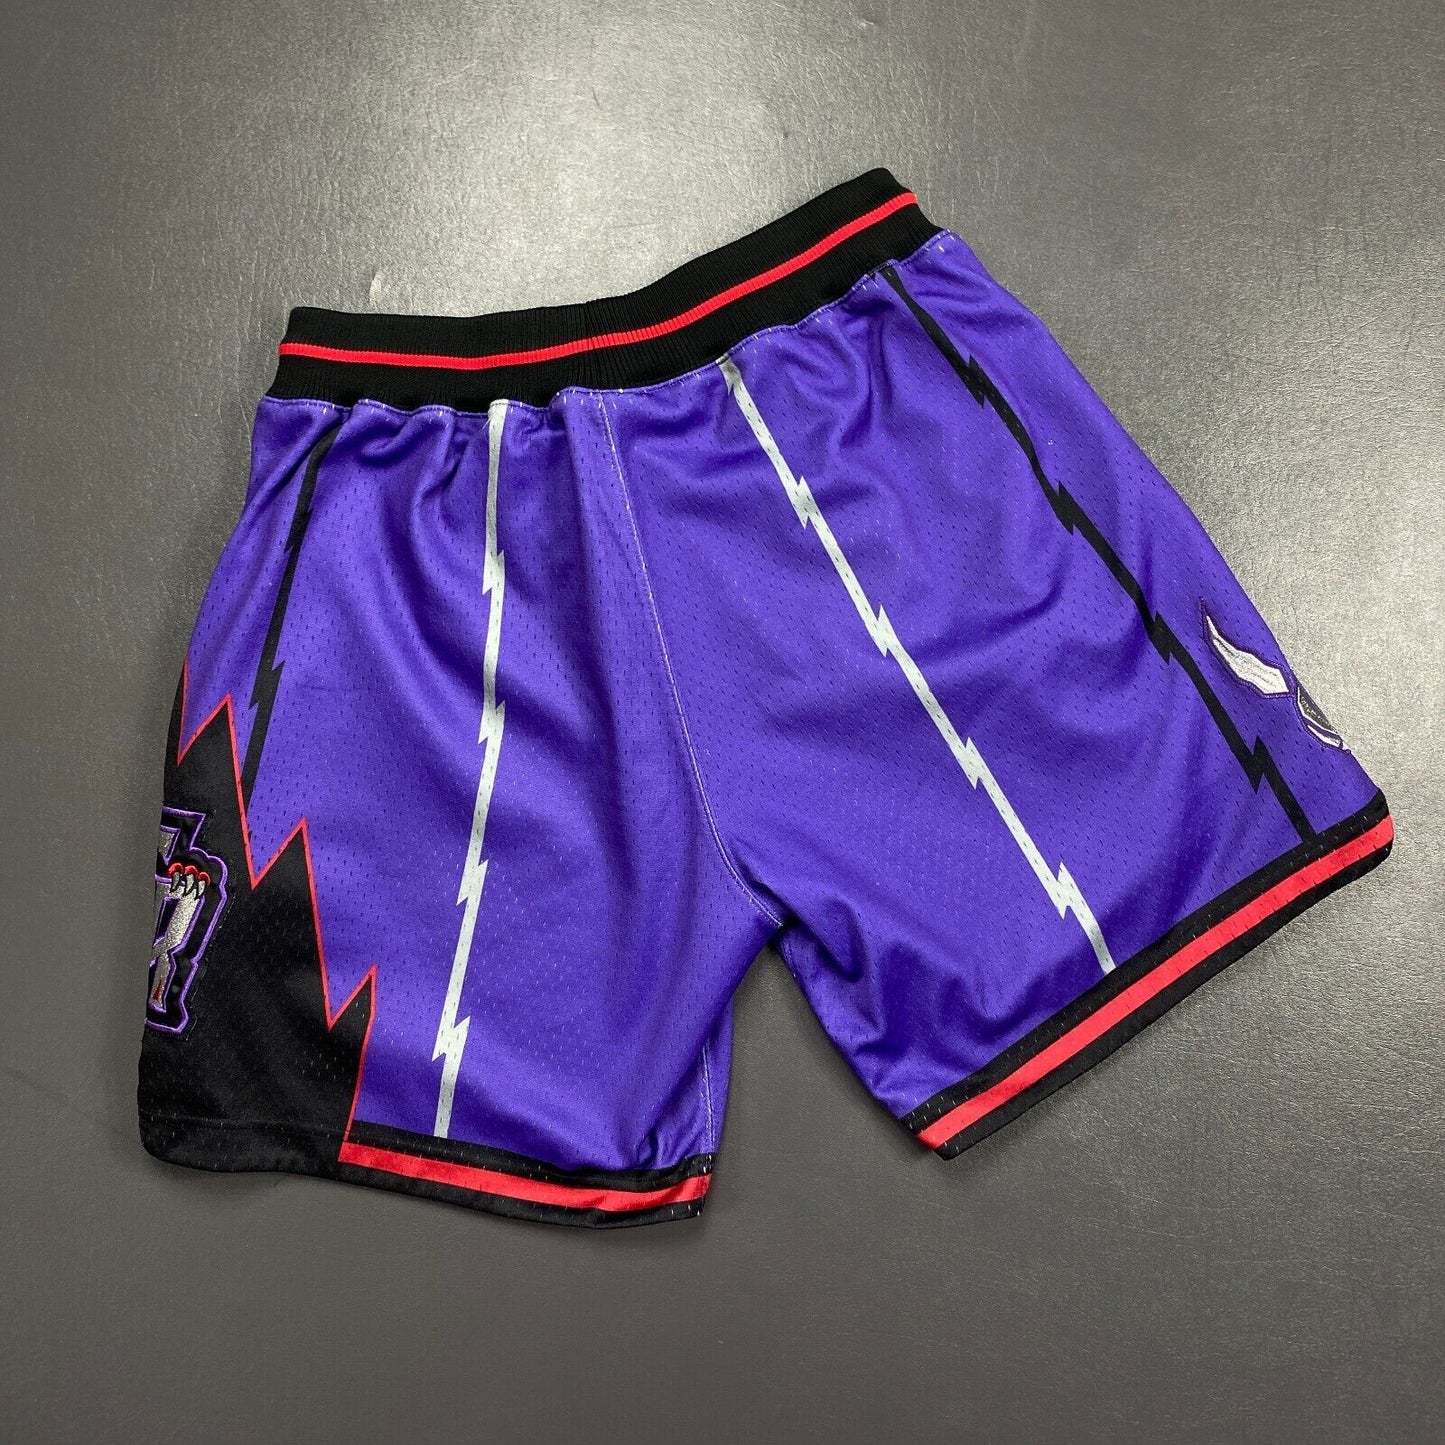 100% Authentic 98 99 Toronto Raptors Mitchell & Ness Pockets Shorts Size L 44